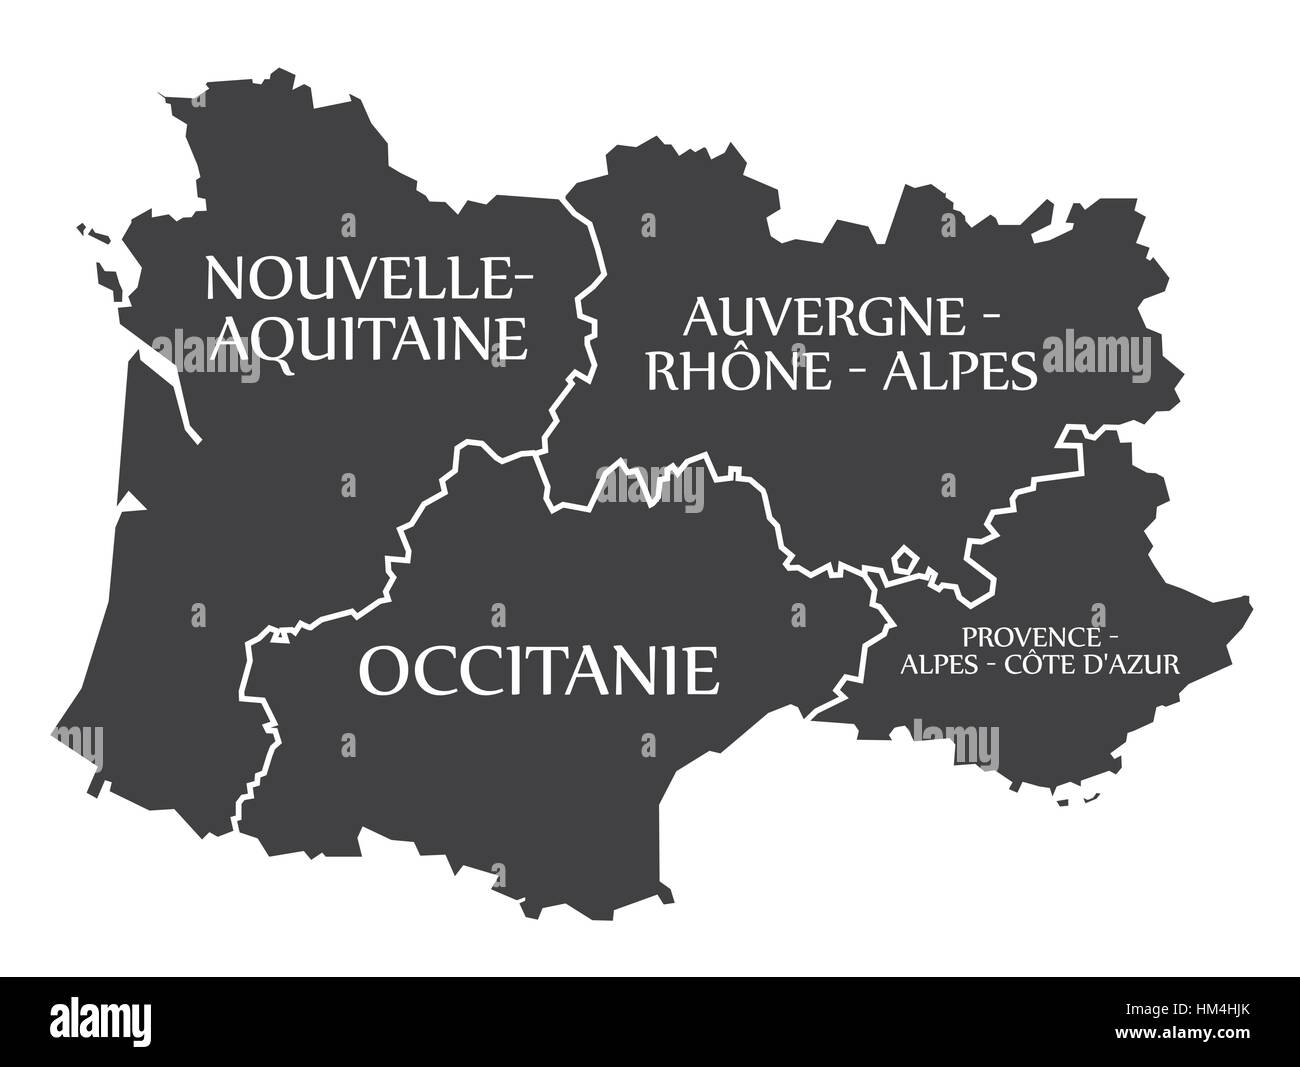 Nouvelle - Aquitaine - Occitanie - Auvergne - Provence Karte Frankreich Abbildung Stock Vektor